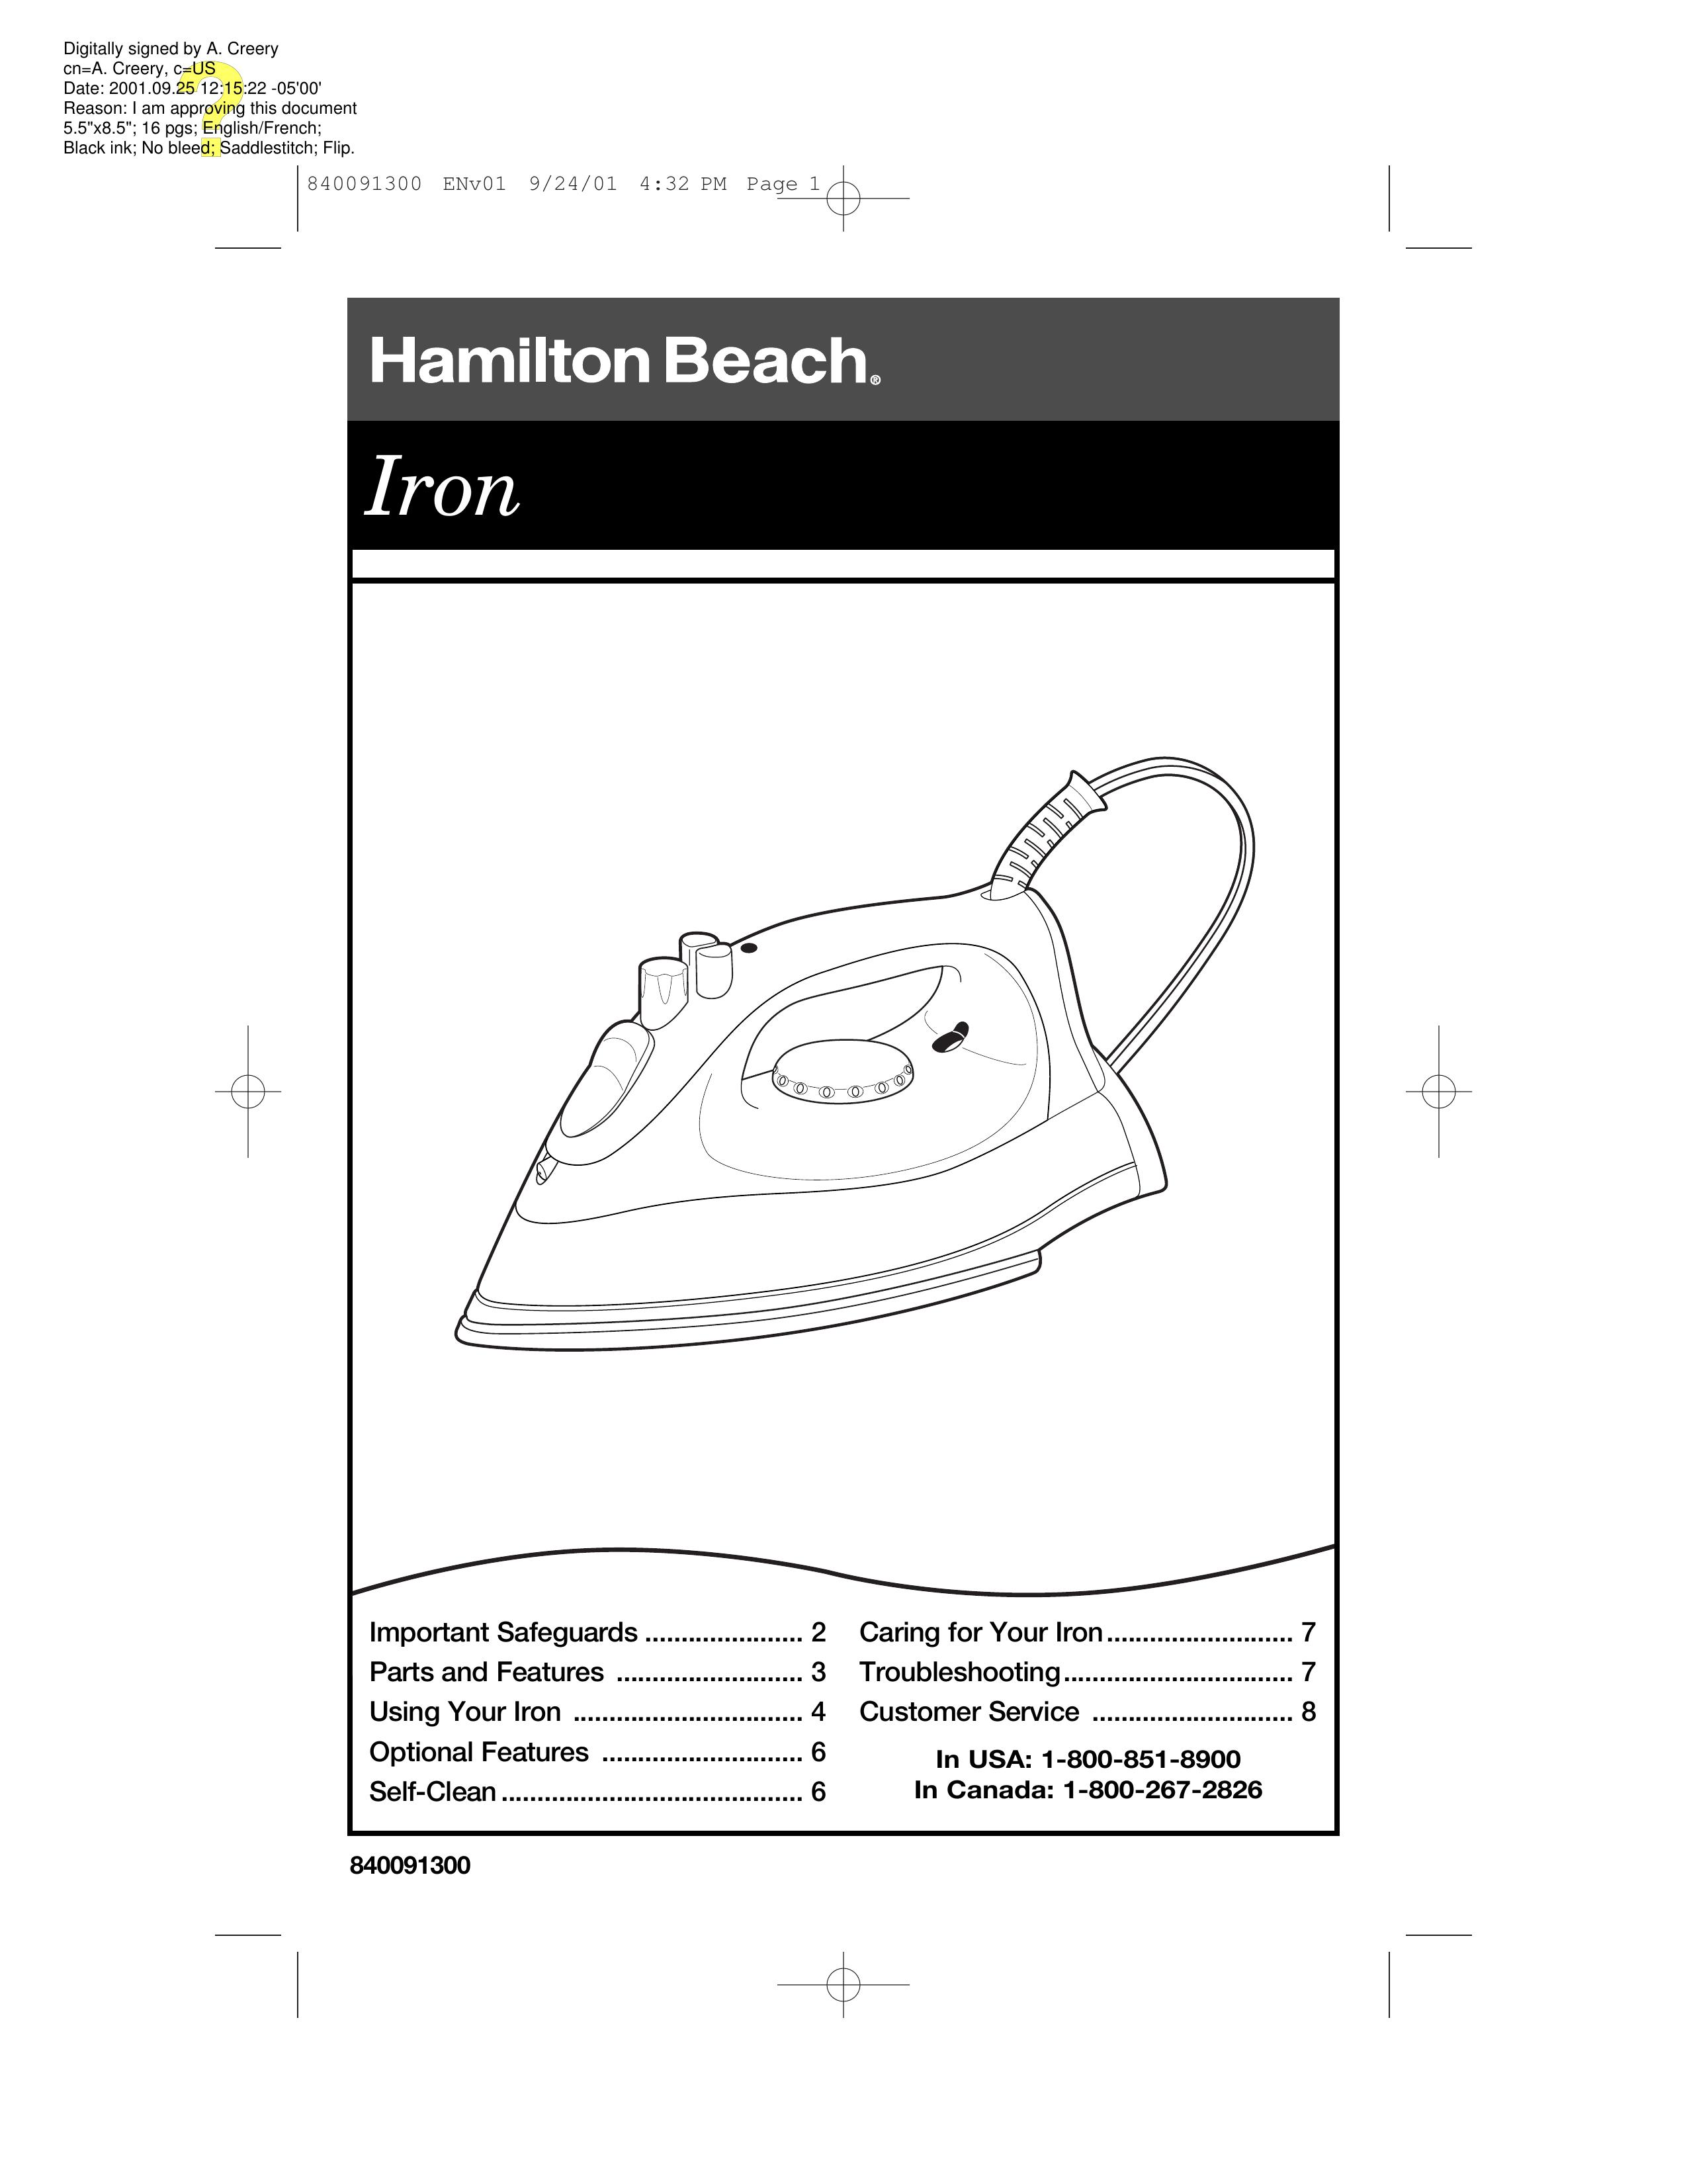 Hamilton Beach 840091300 Iron User Manual